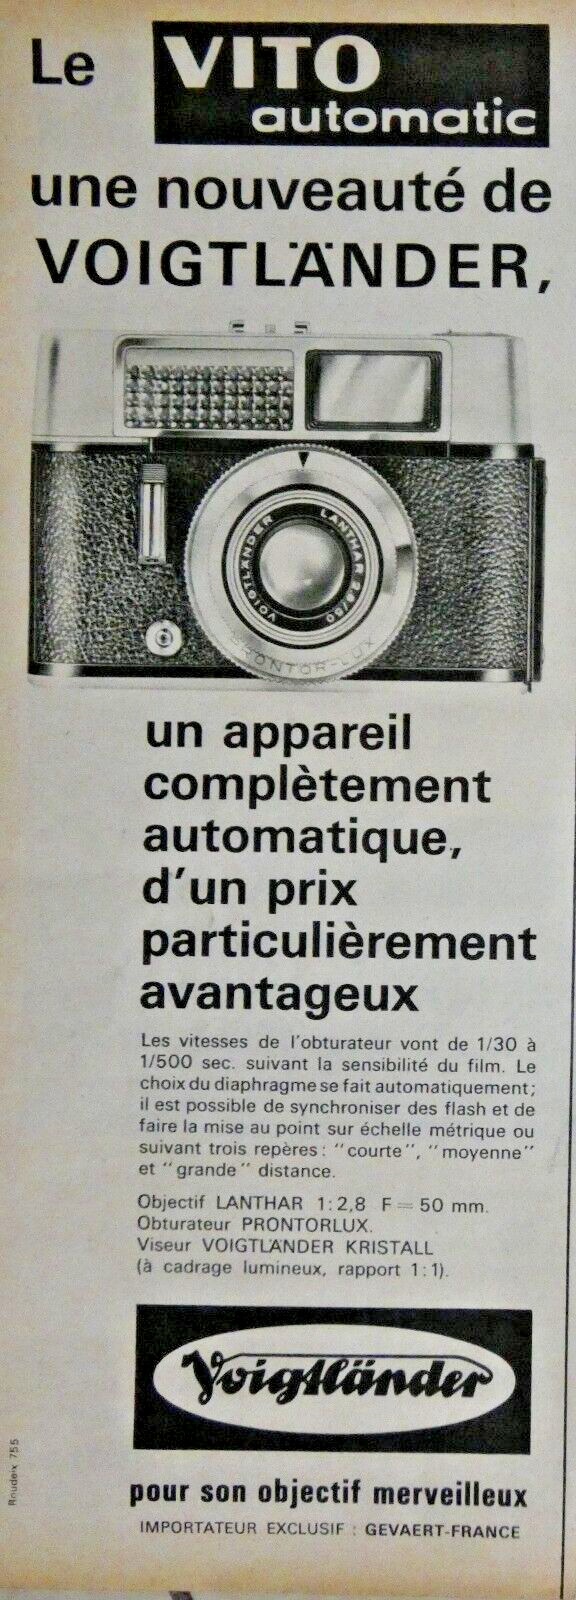 1962 VOIGTLANDER LE VITO AUTOMATIC PRESS ADVERTISEMENT - ADVERTISING